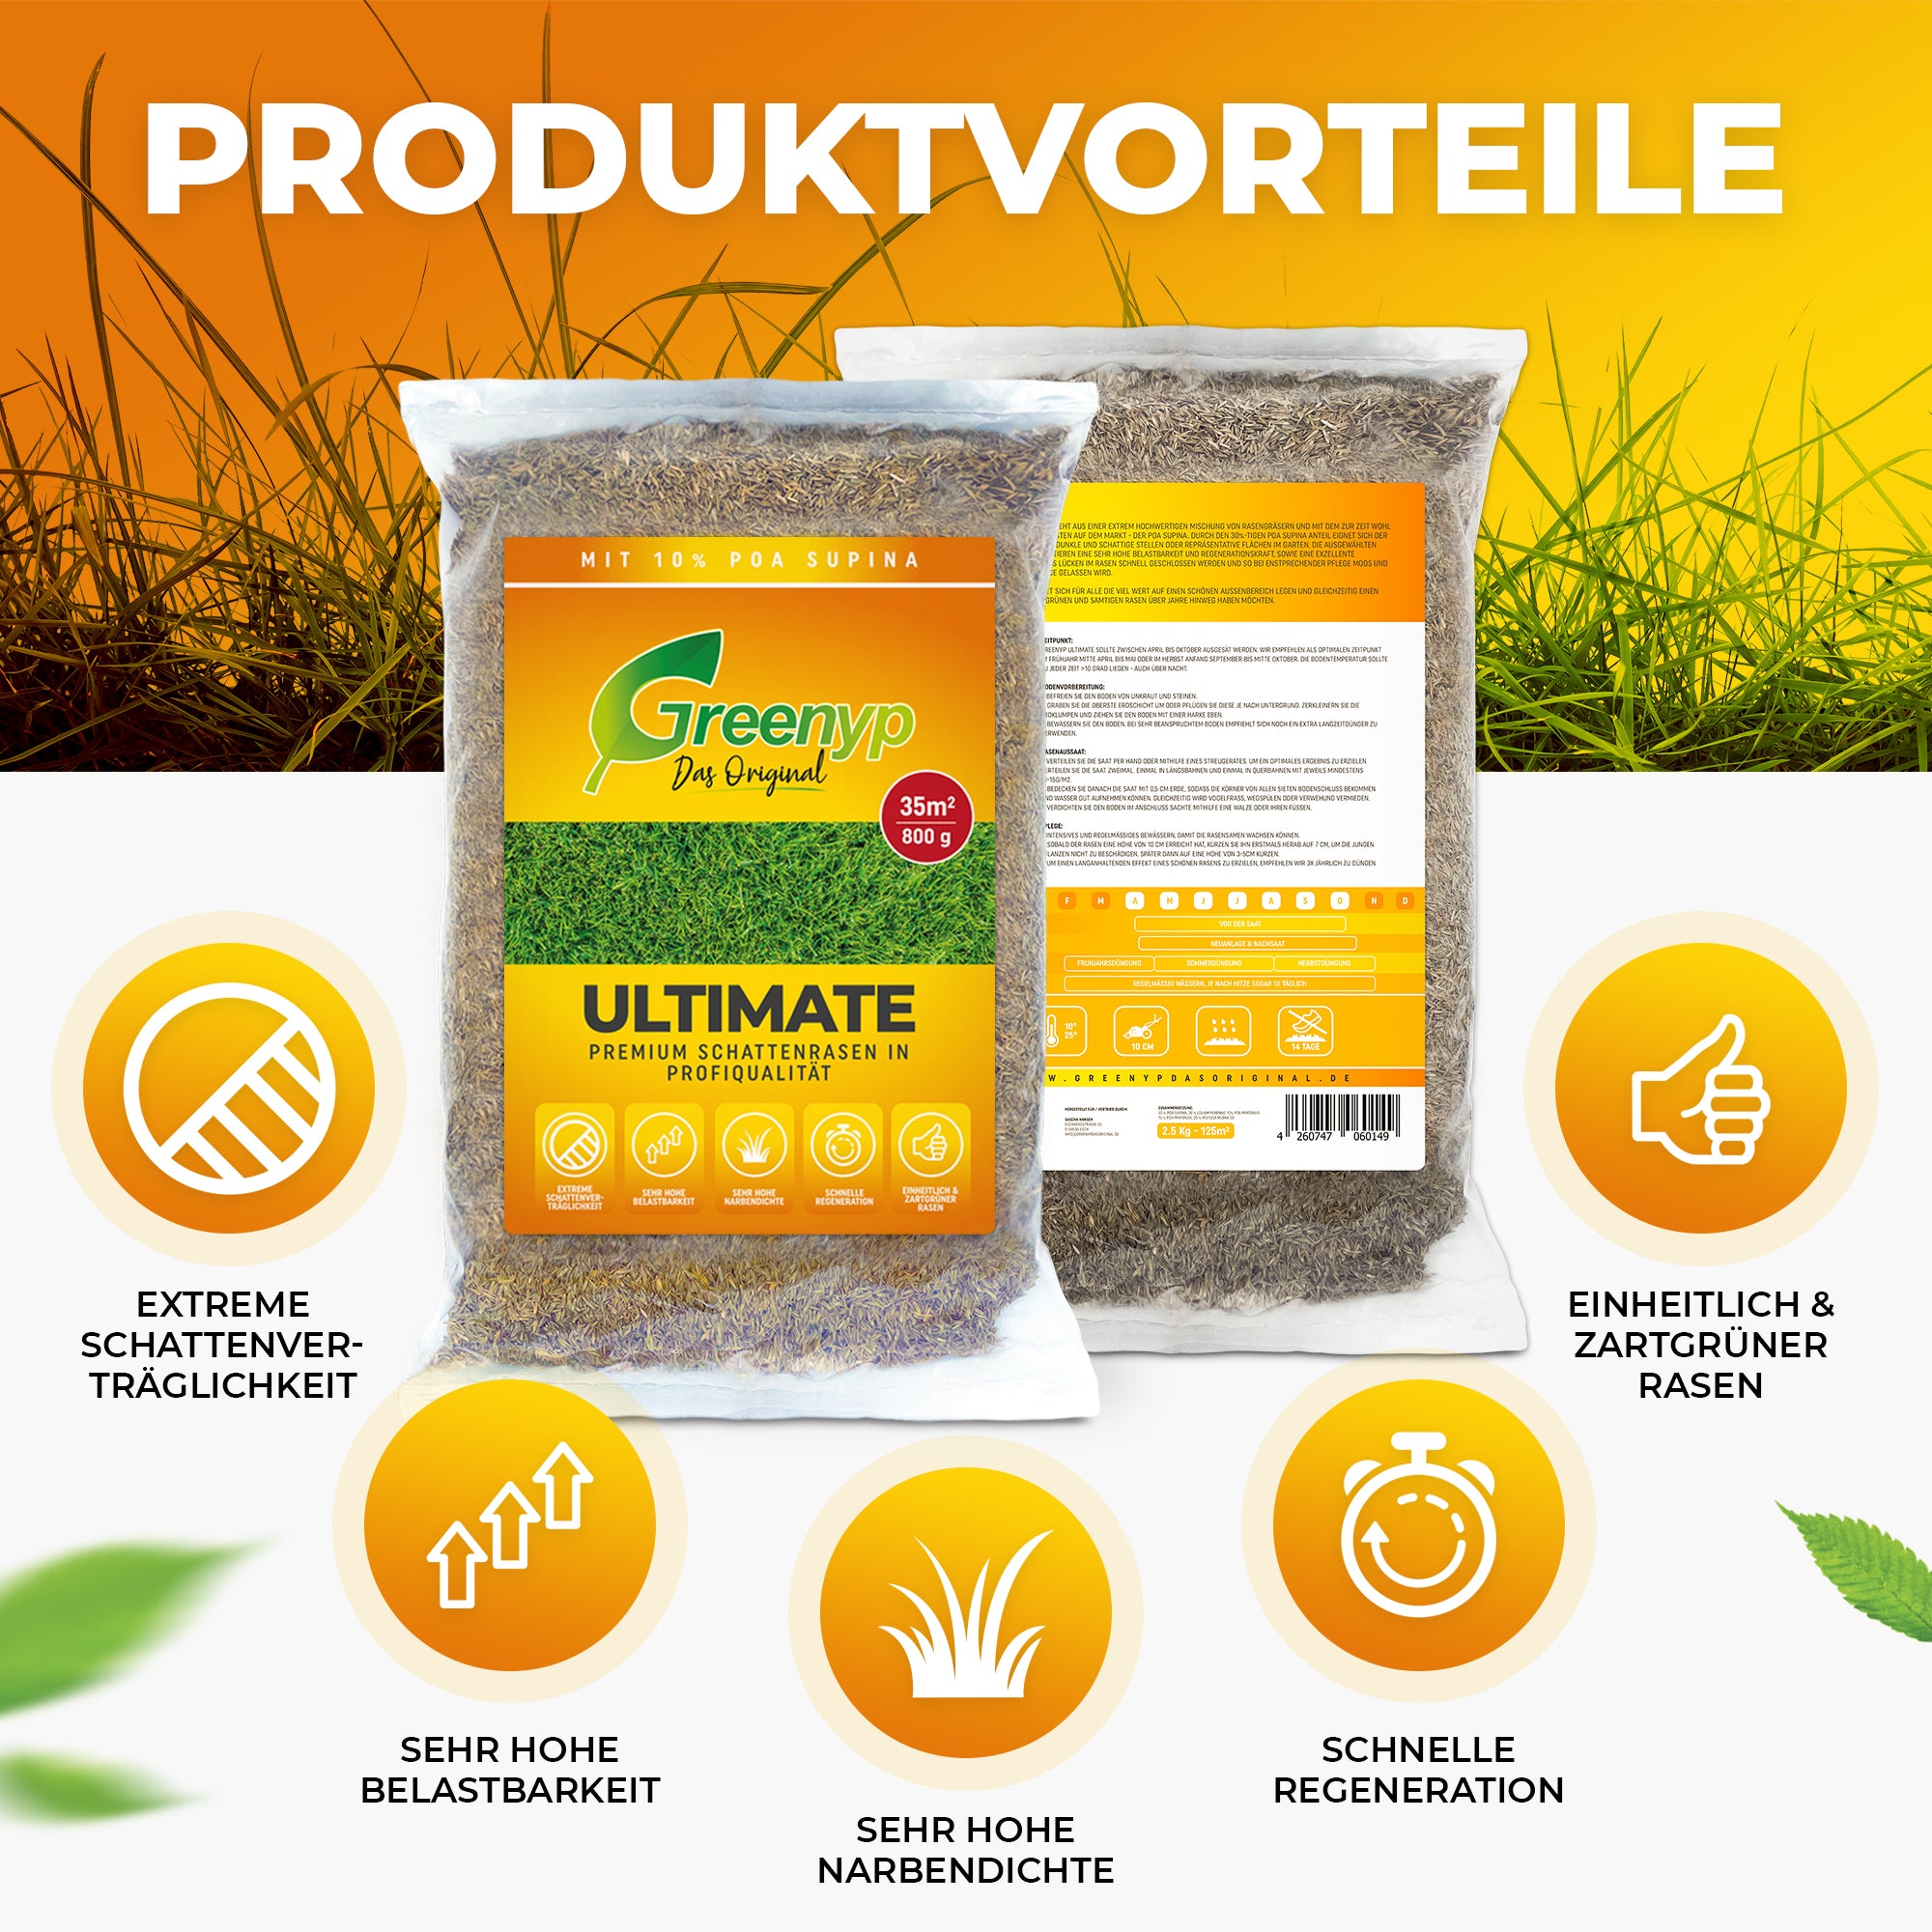 Ultimate Rasen - Premium Schattenrasen mit 10% Poa Supina